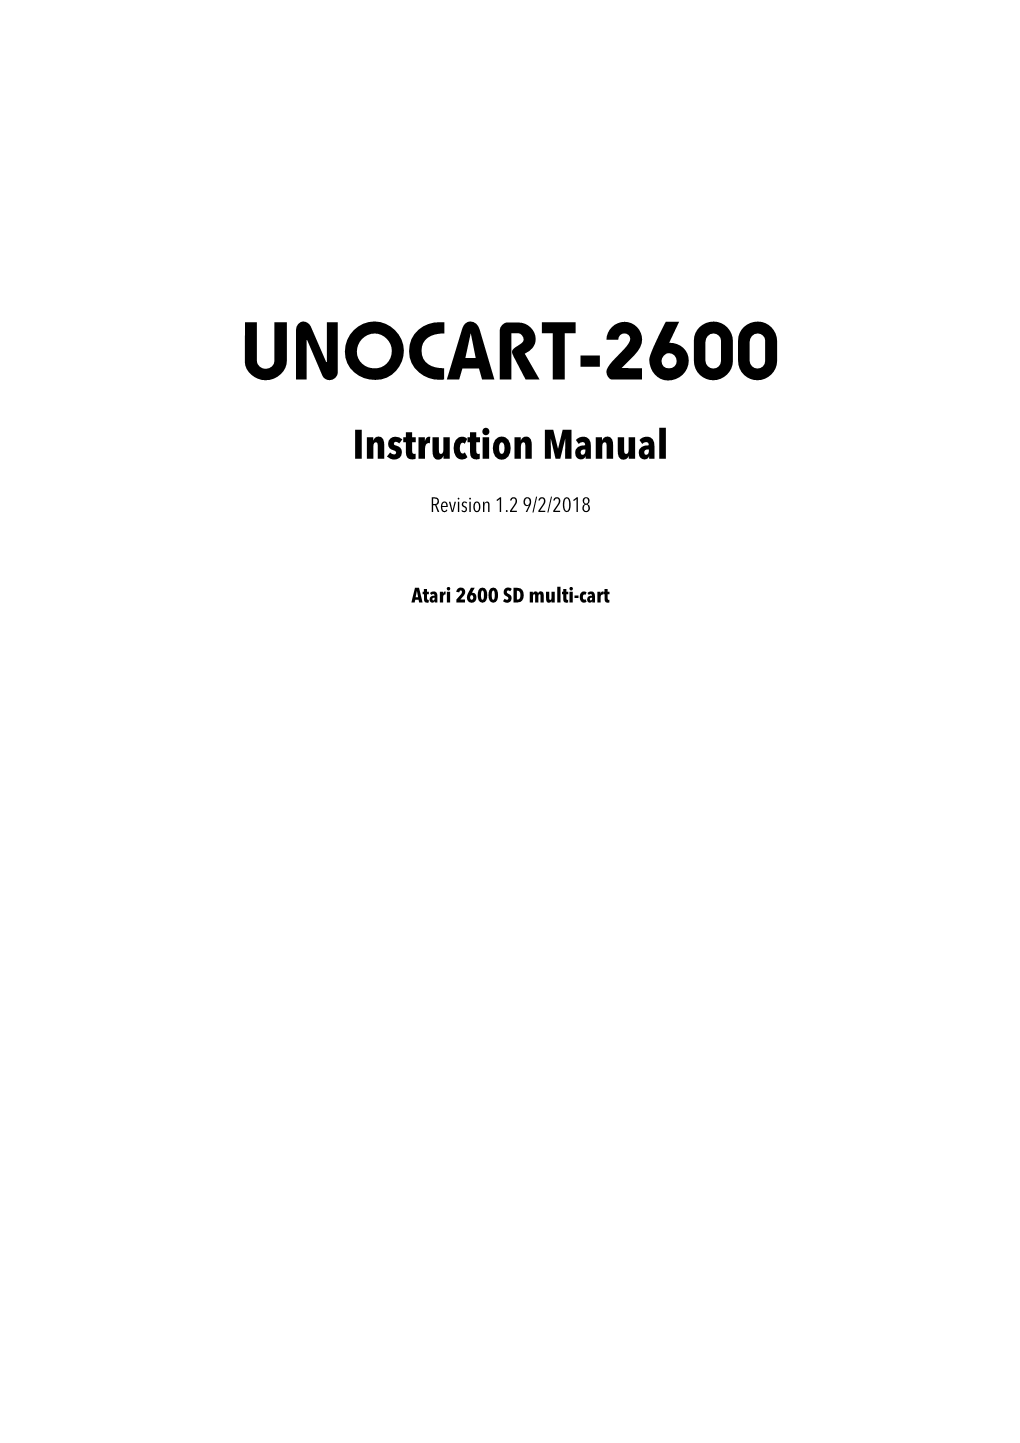 UNOCART-2600 Instruction Manual